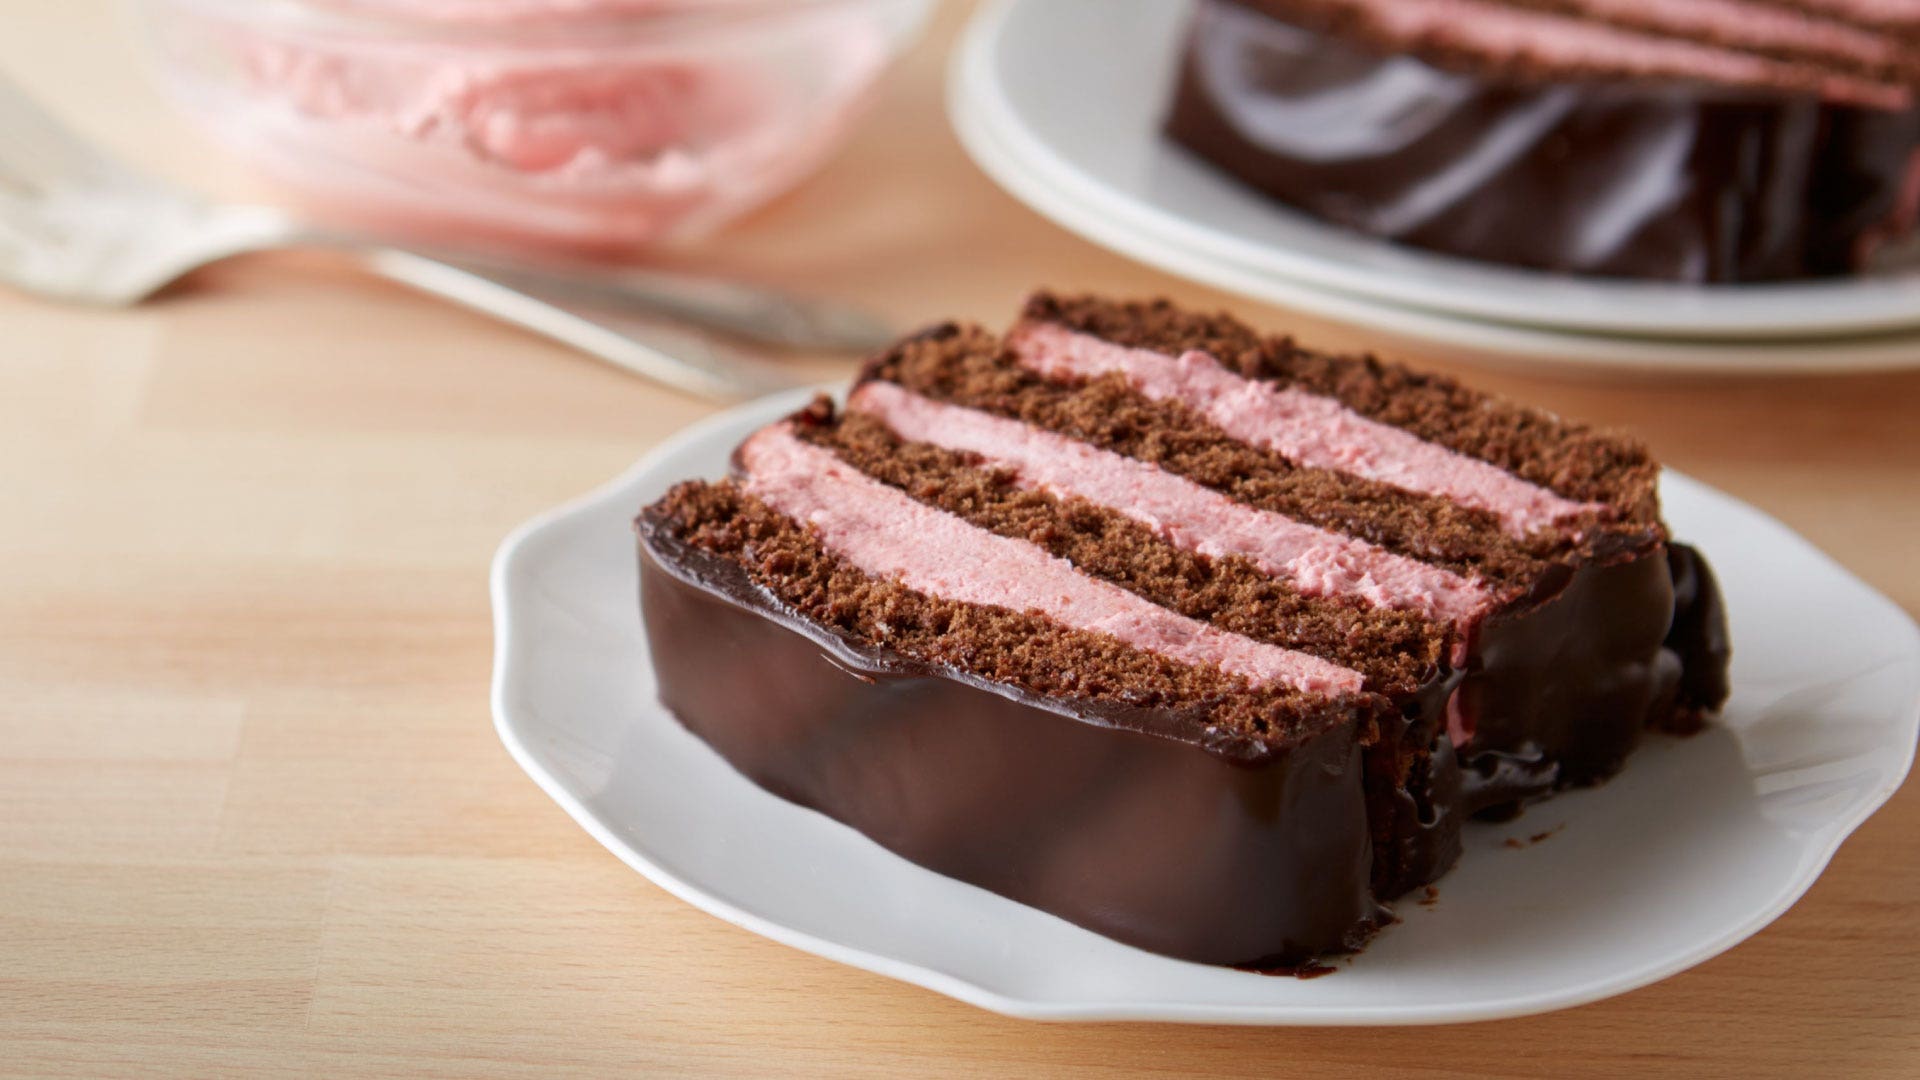 Chocolate Strawberry Cake - My Baking Addiction